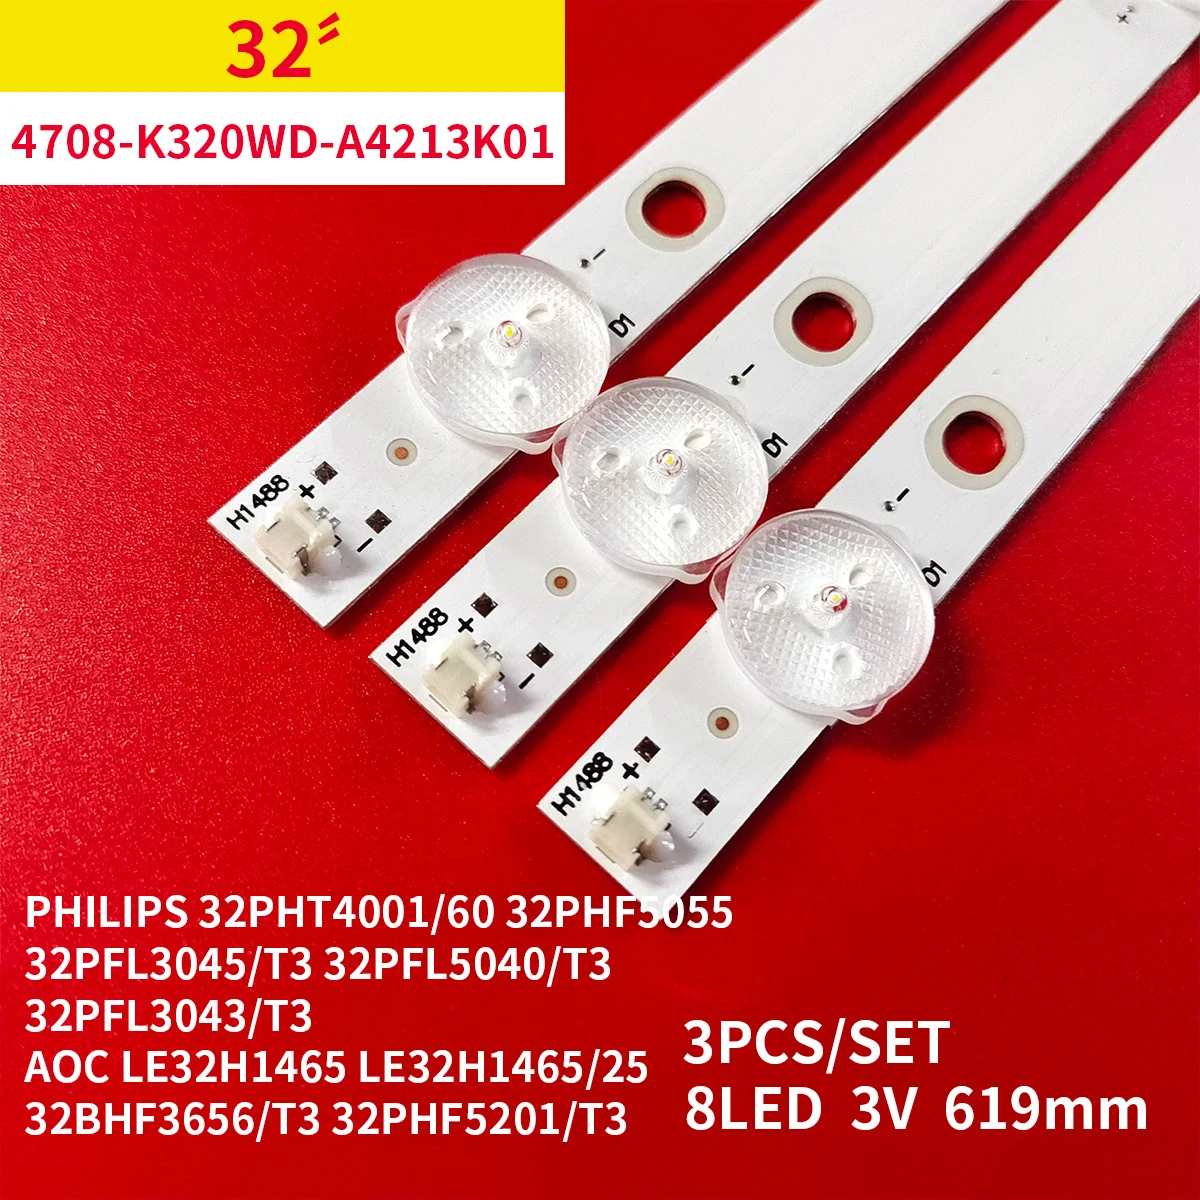 60Pcs/20 Set LED Backlight Strip for Aoc LE32H1465 32BHF3656/T3 32PHF5201/T3 4708-K320WD-A4213K01 Telefunken TF-LED32S35T2